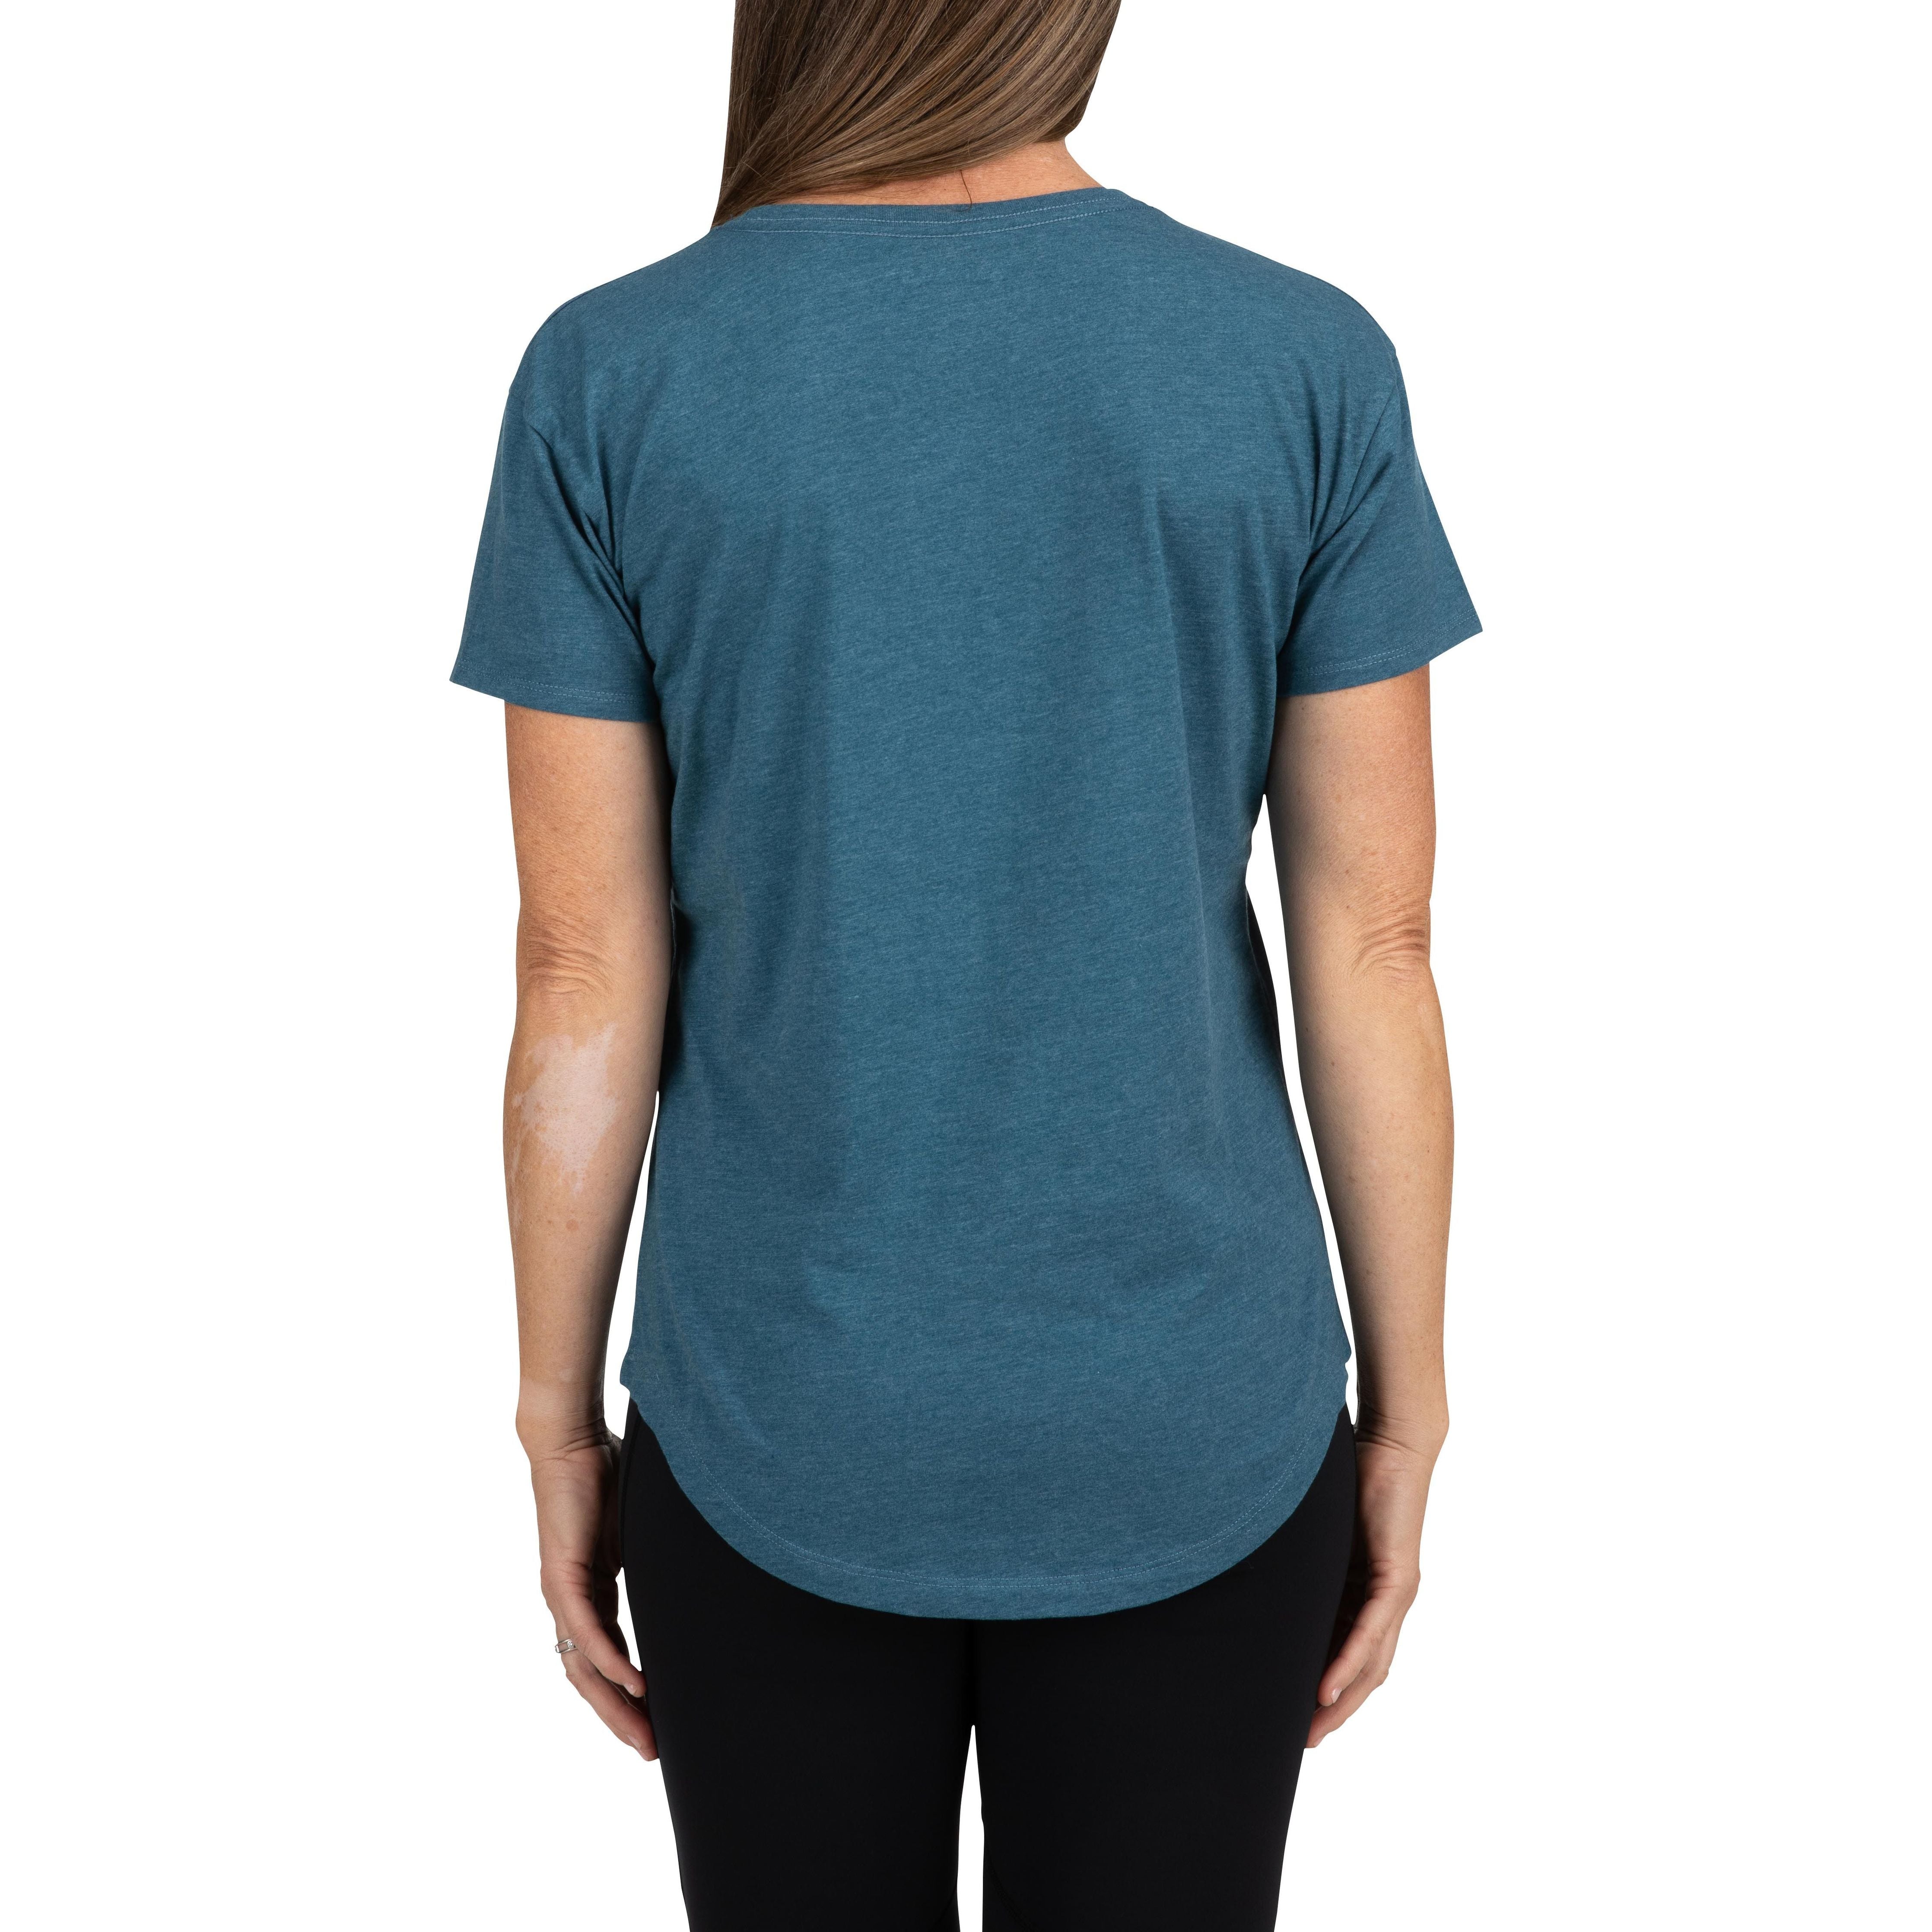 Simms Women's Floral Trout T-Shirt Steel Blue Heather Image 04